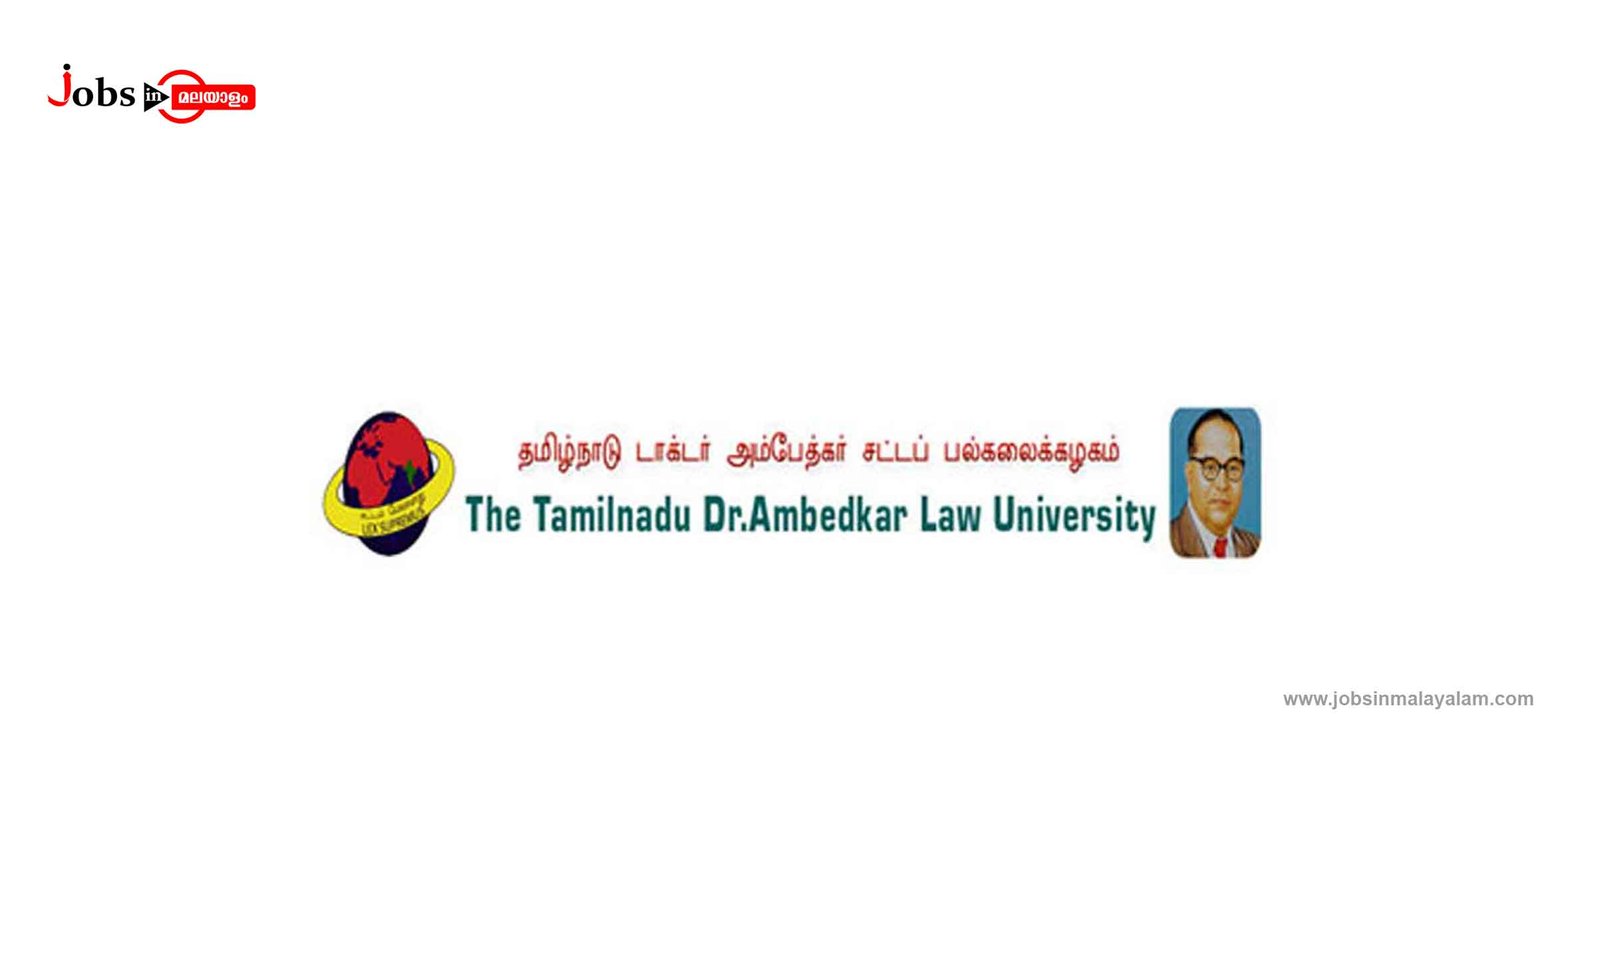 The Tamil Nadu Dr Ambedkar Law University (TNDALU)